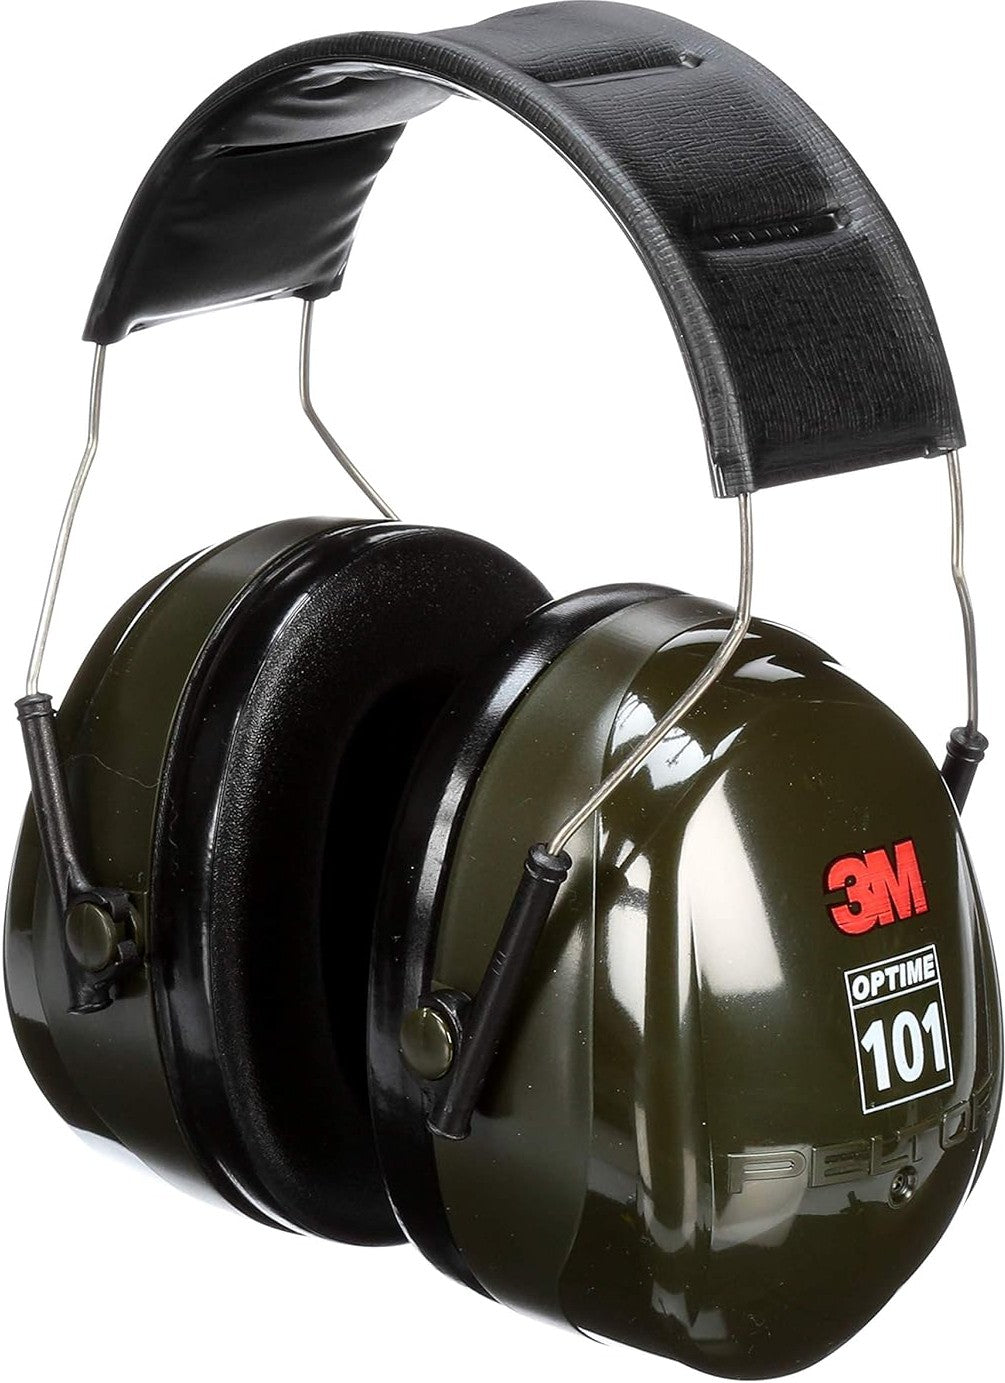 3M - Peltor 101 Over-The-Head Earmuff - 034-H7AMV